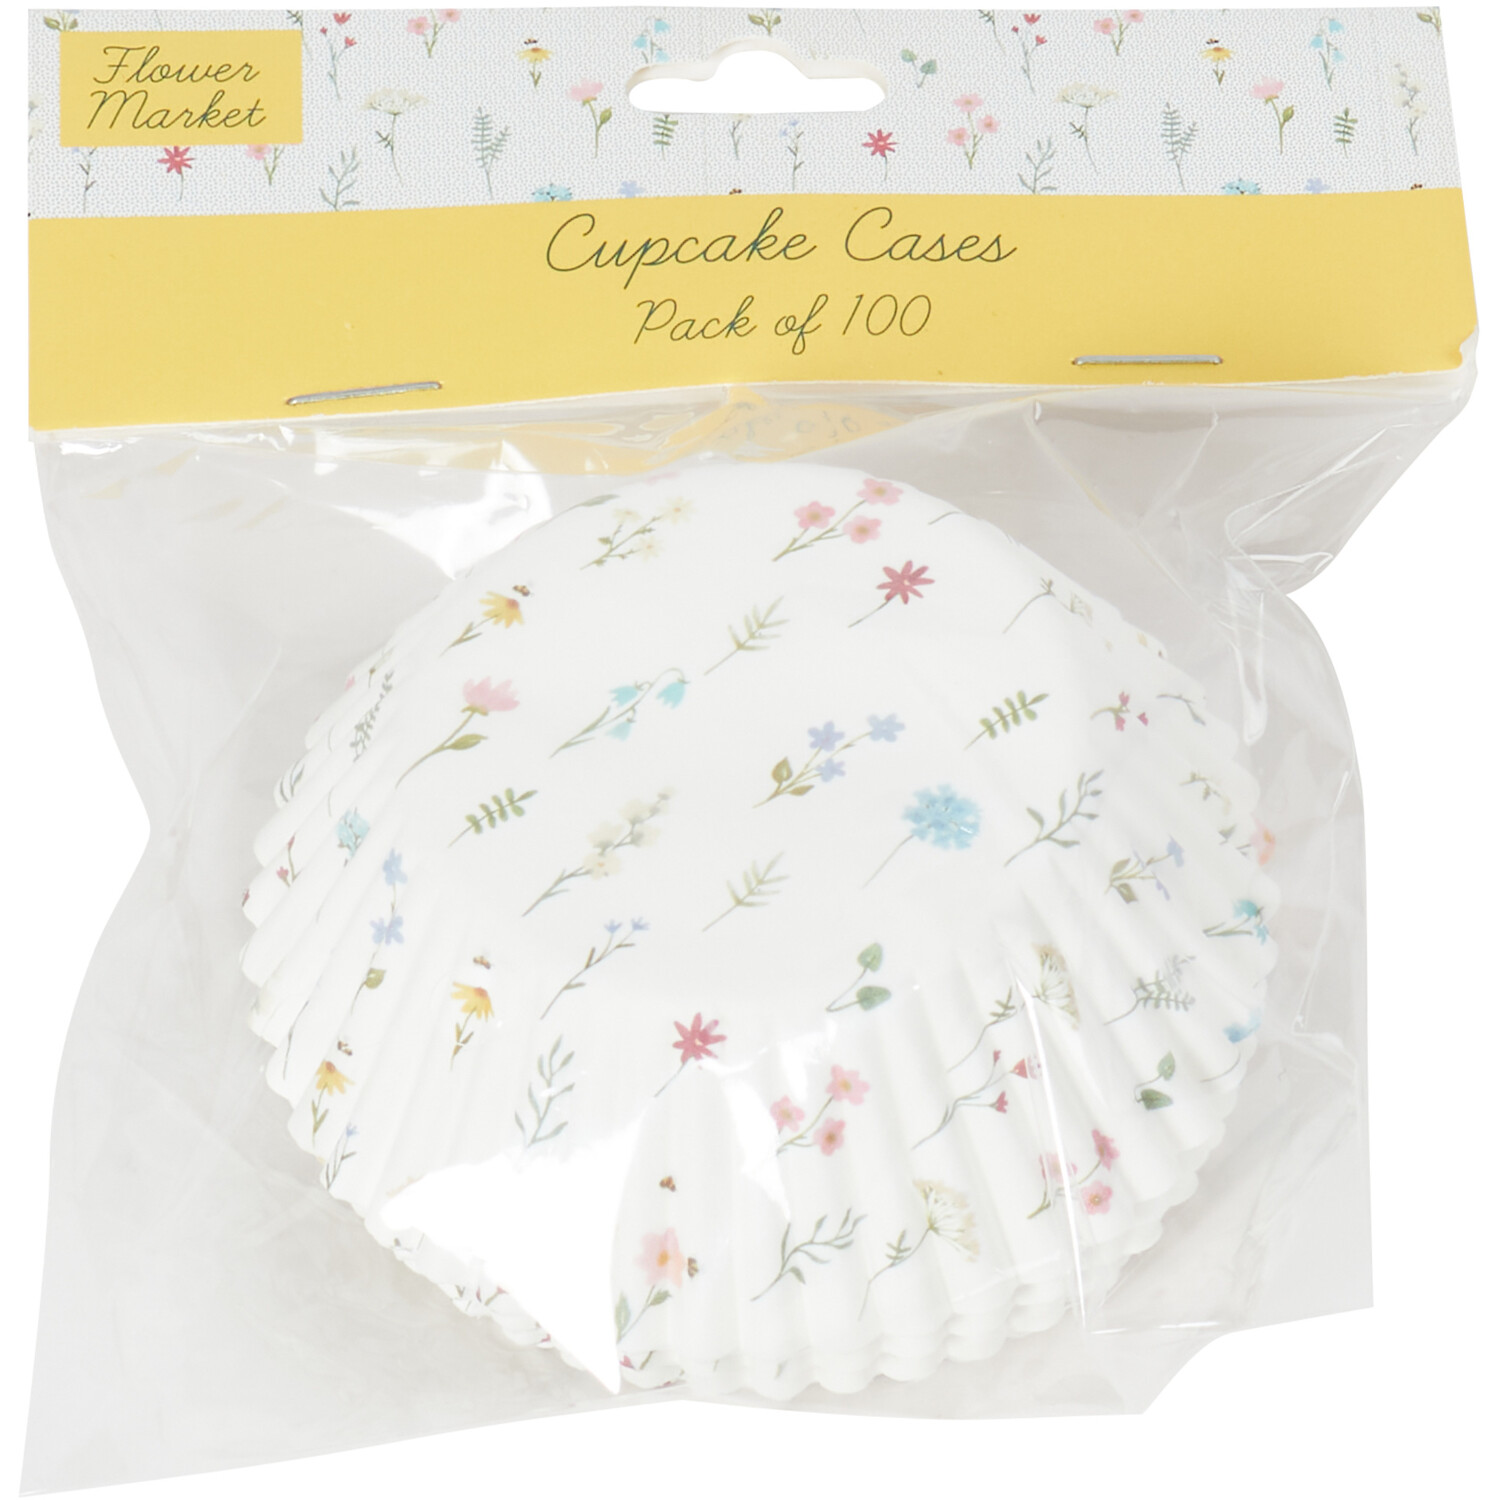 Pack of 100 Flower Market Cupcake Cases - White Image 1